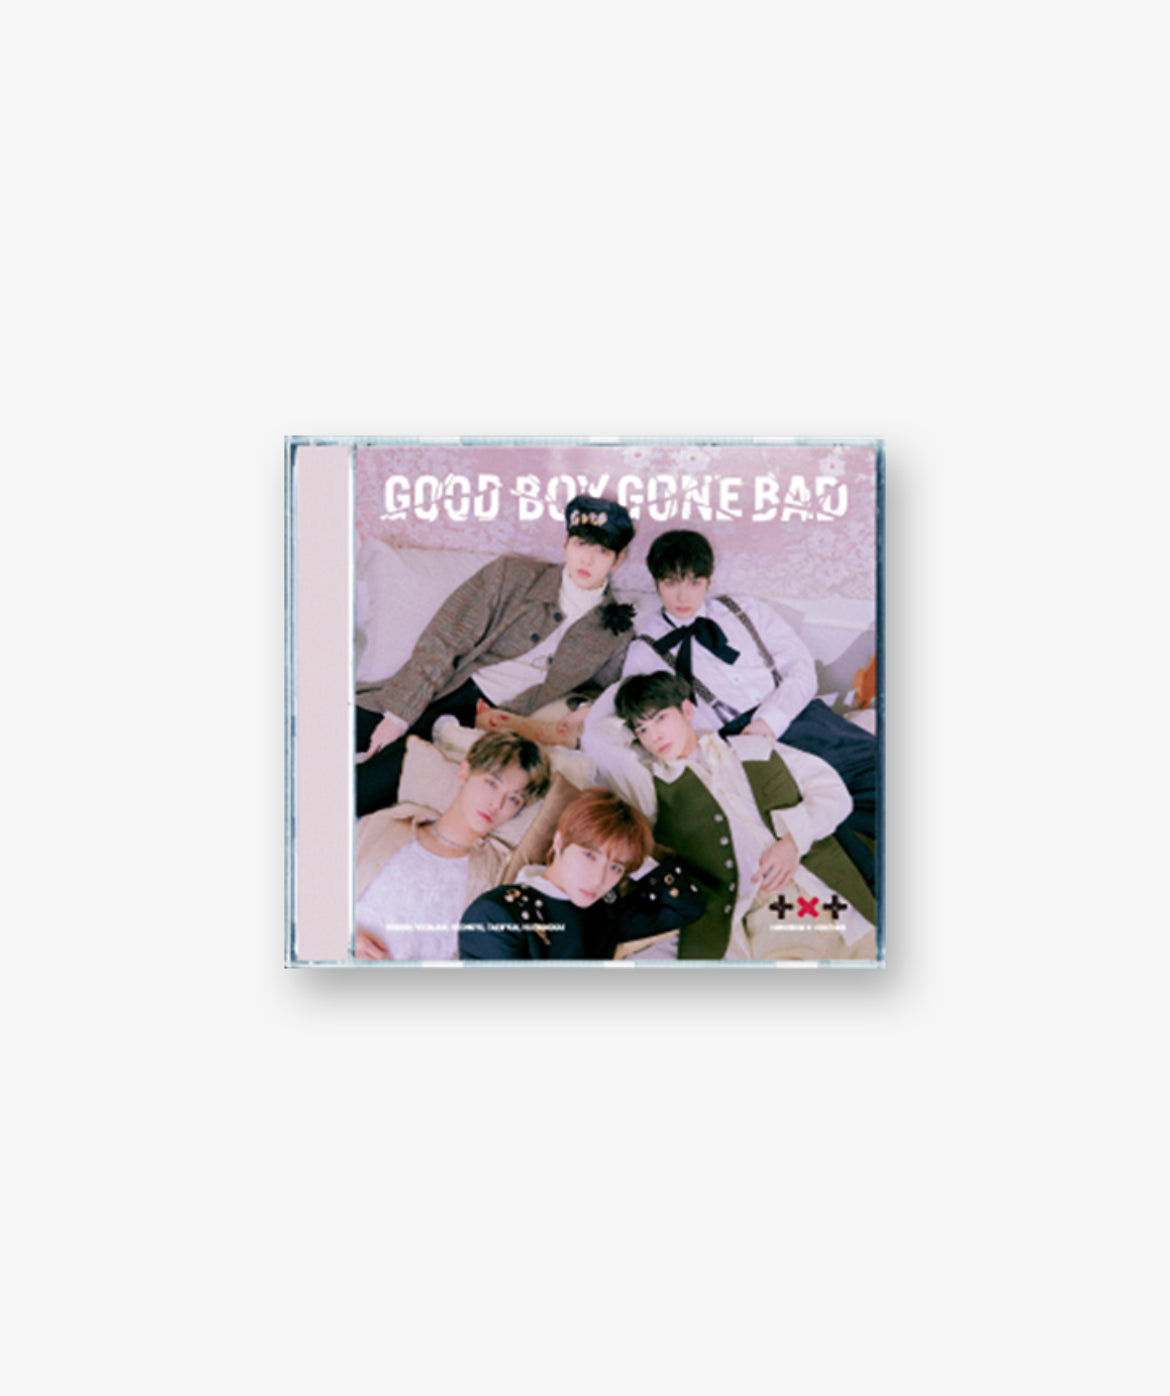 TXT 'Good Boy Gone Bad' Japanese Album